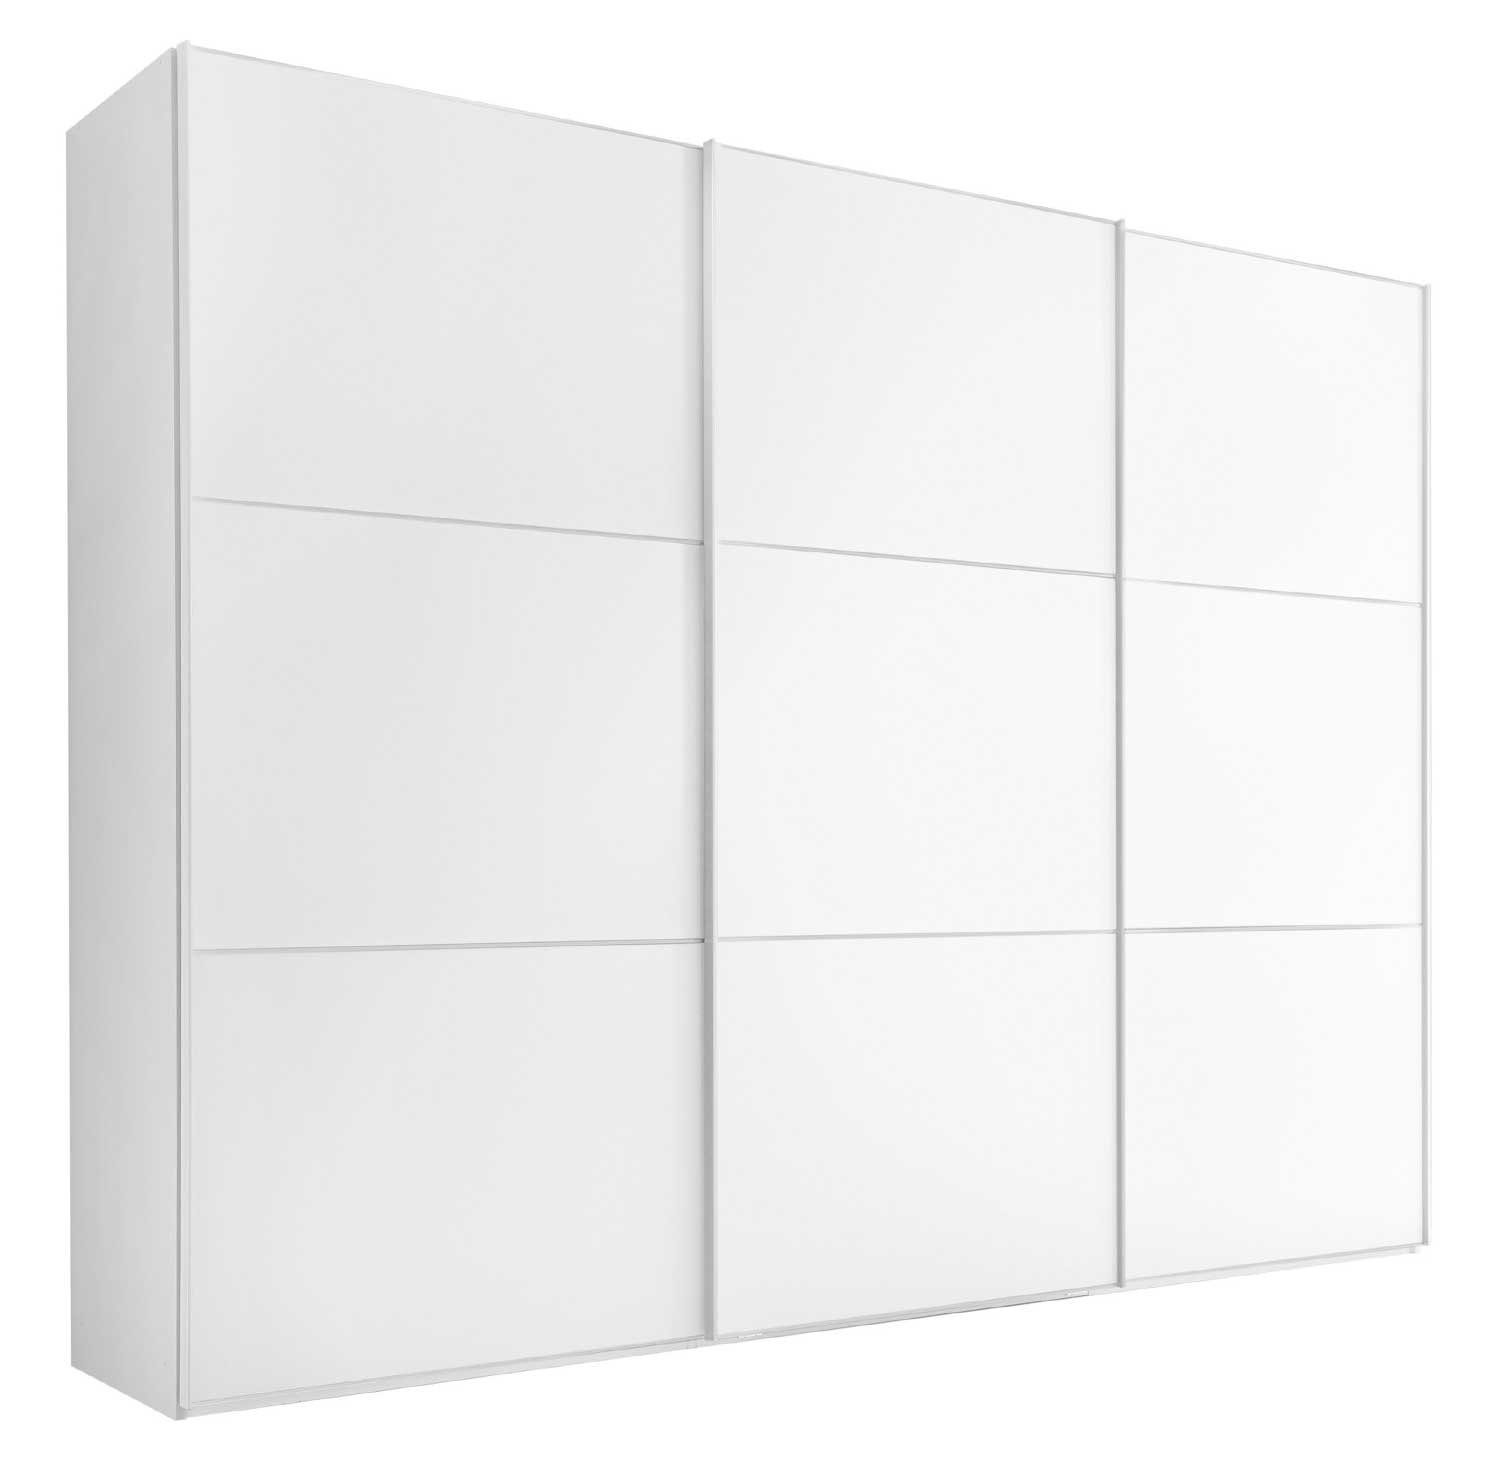 STAUD Schwebetürenschrank LENTO, (1 Schrank) B 249 cm x H 222 cm, Weiß matt, 3 Türen